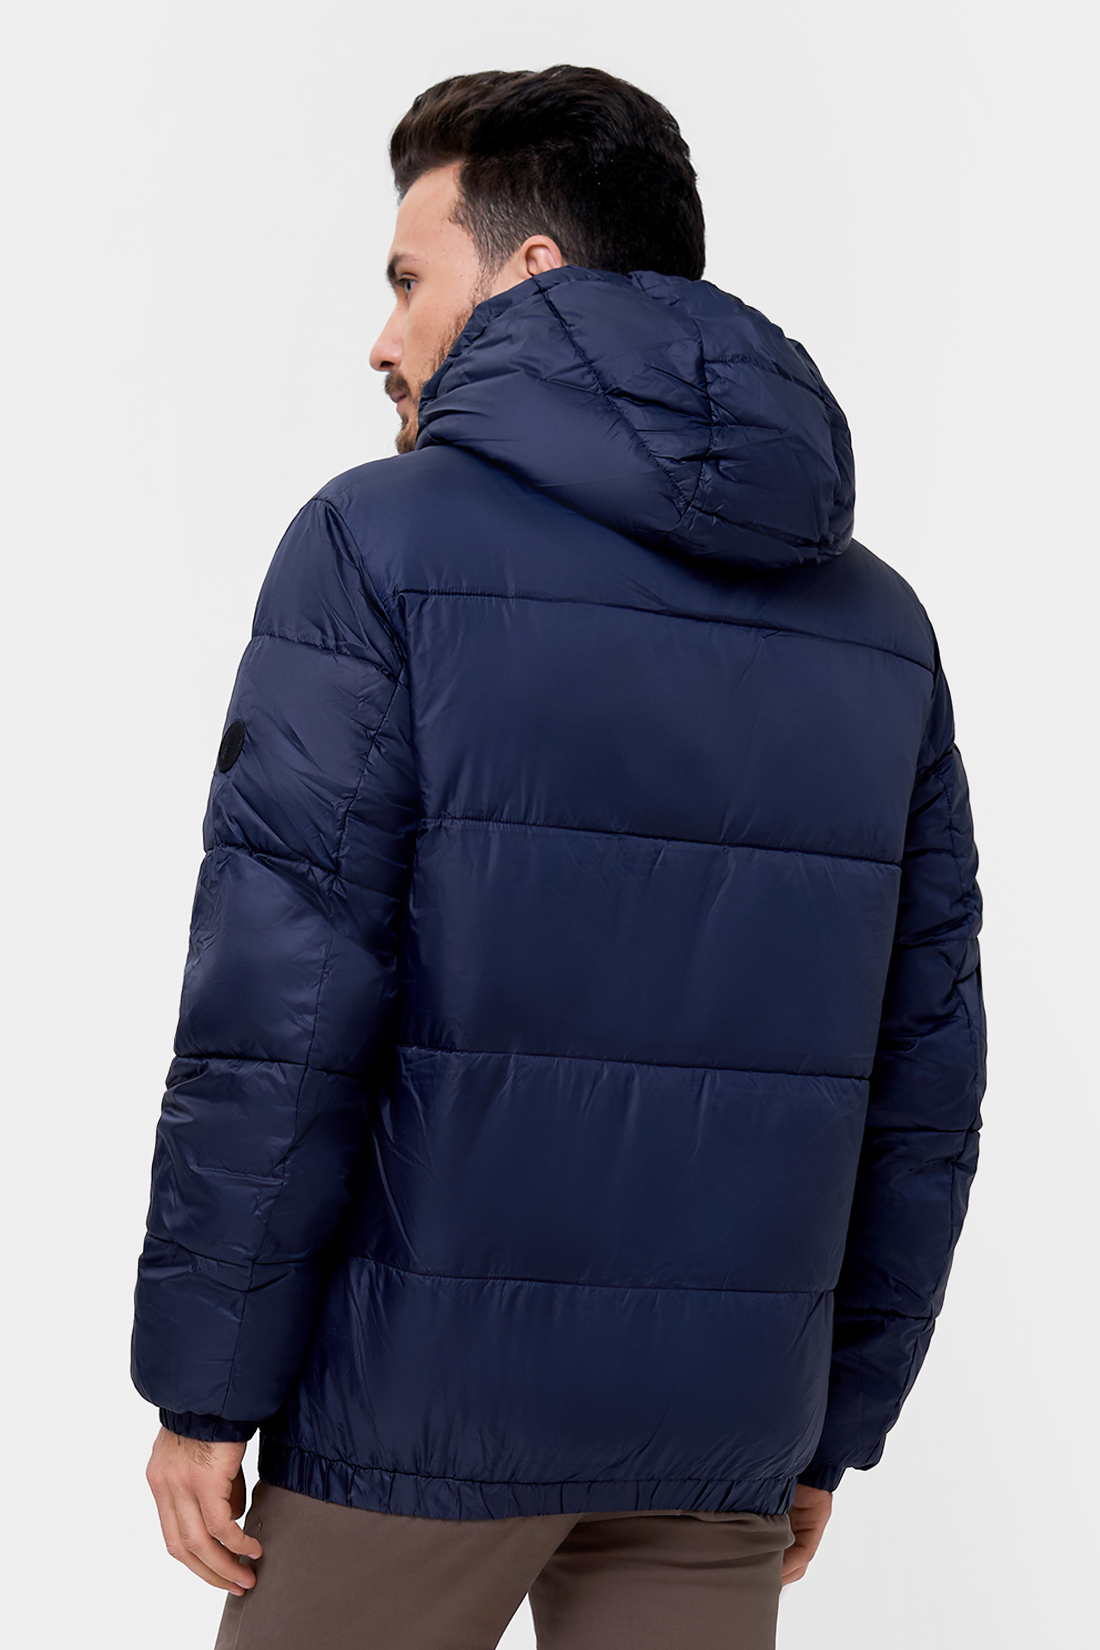 Куртка (Эко пух) (арт. baon B540503), размер S, цвет синий Куртка (Эко пух) (арт. baon B540503) - фото 2